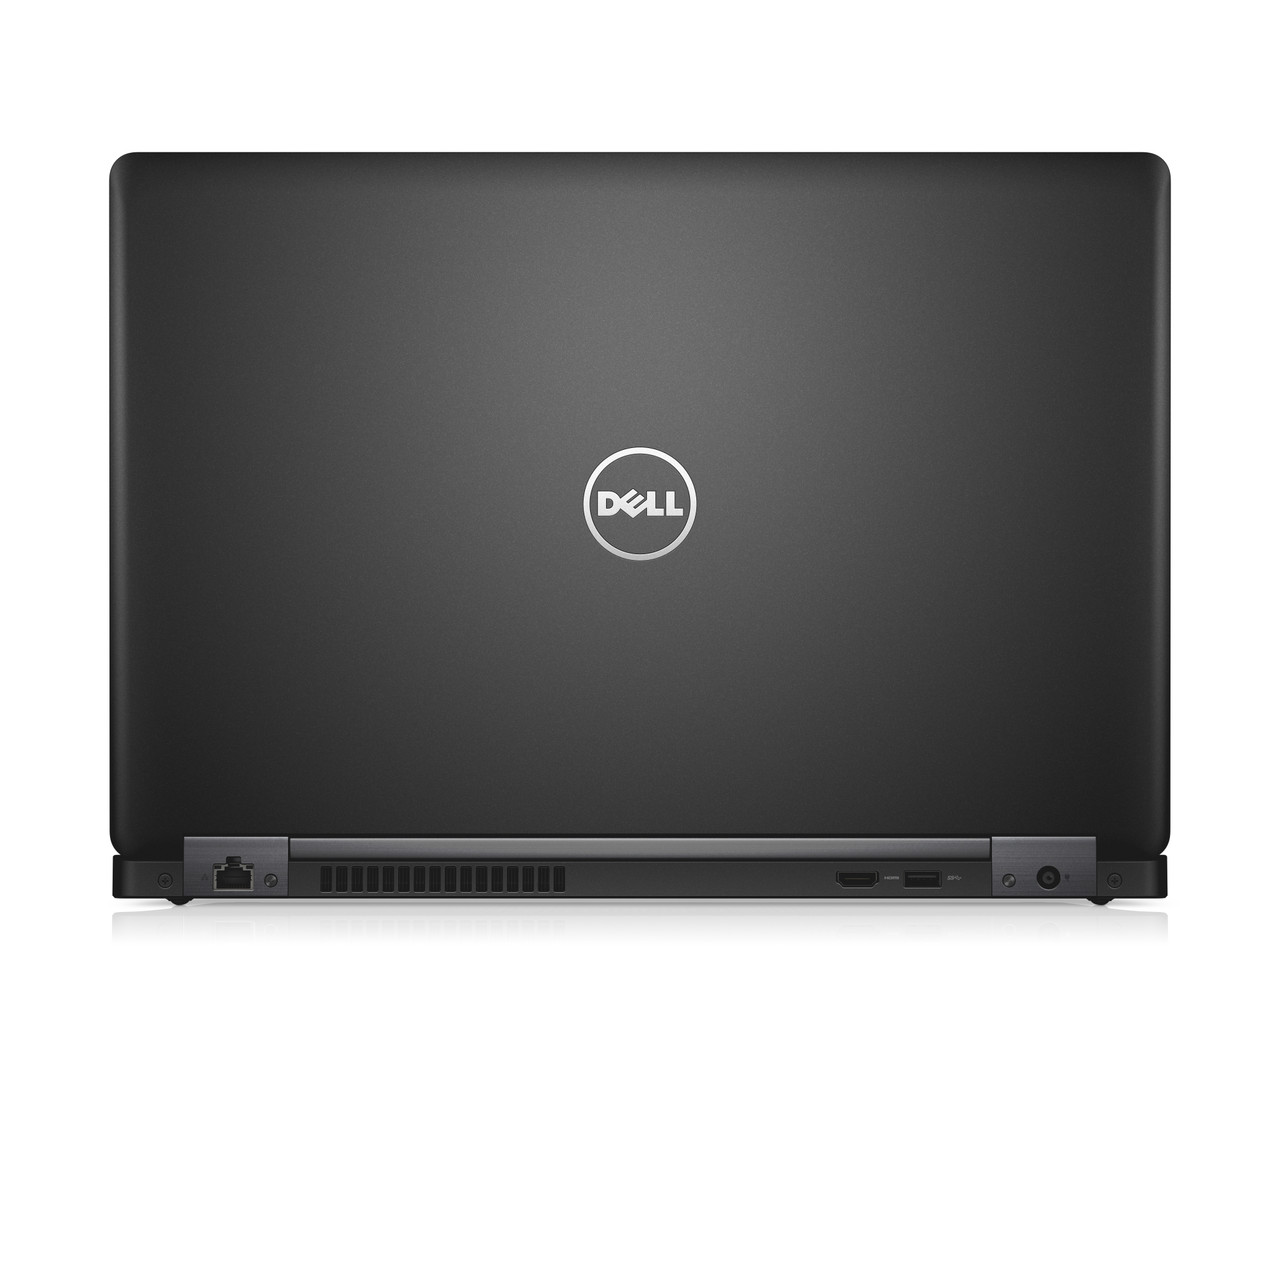 Dell Latitude 3380 Laptop i5-7200U 8 GB 250 GB HDD Windows 10 PRO